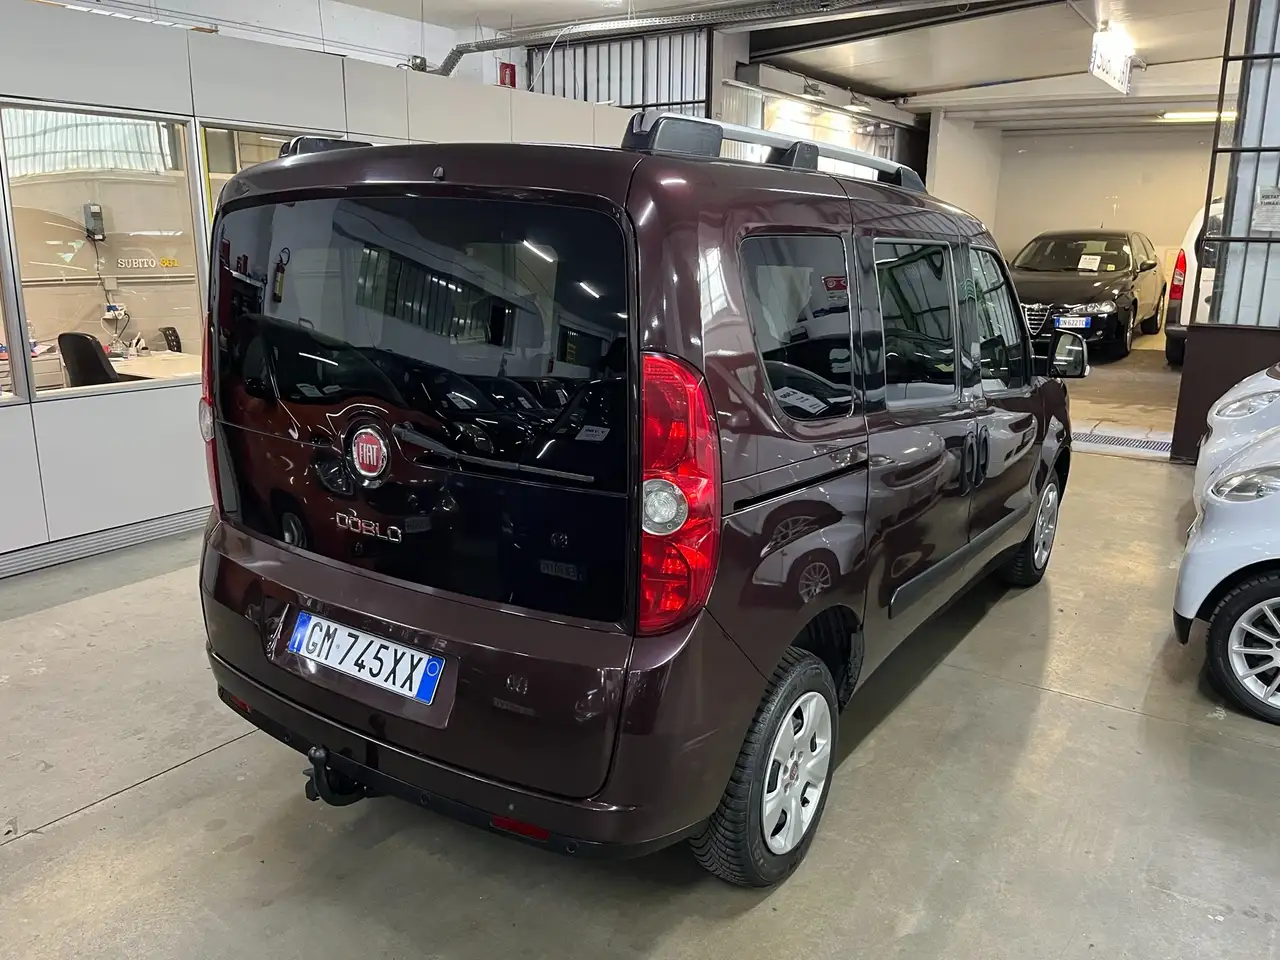 usato Fiat Doblo Station wagon a Genova - GE per € 8.900,-